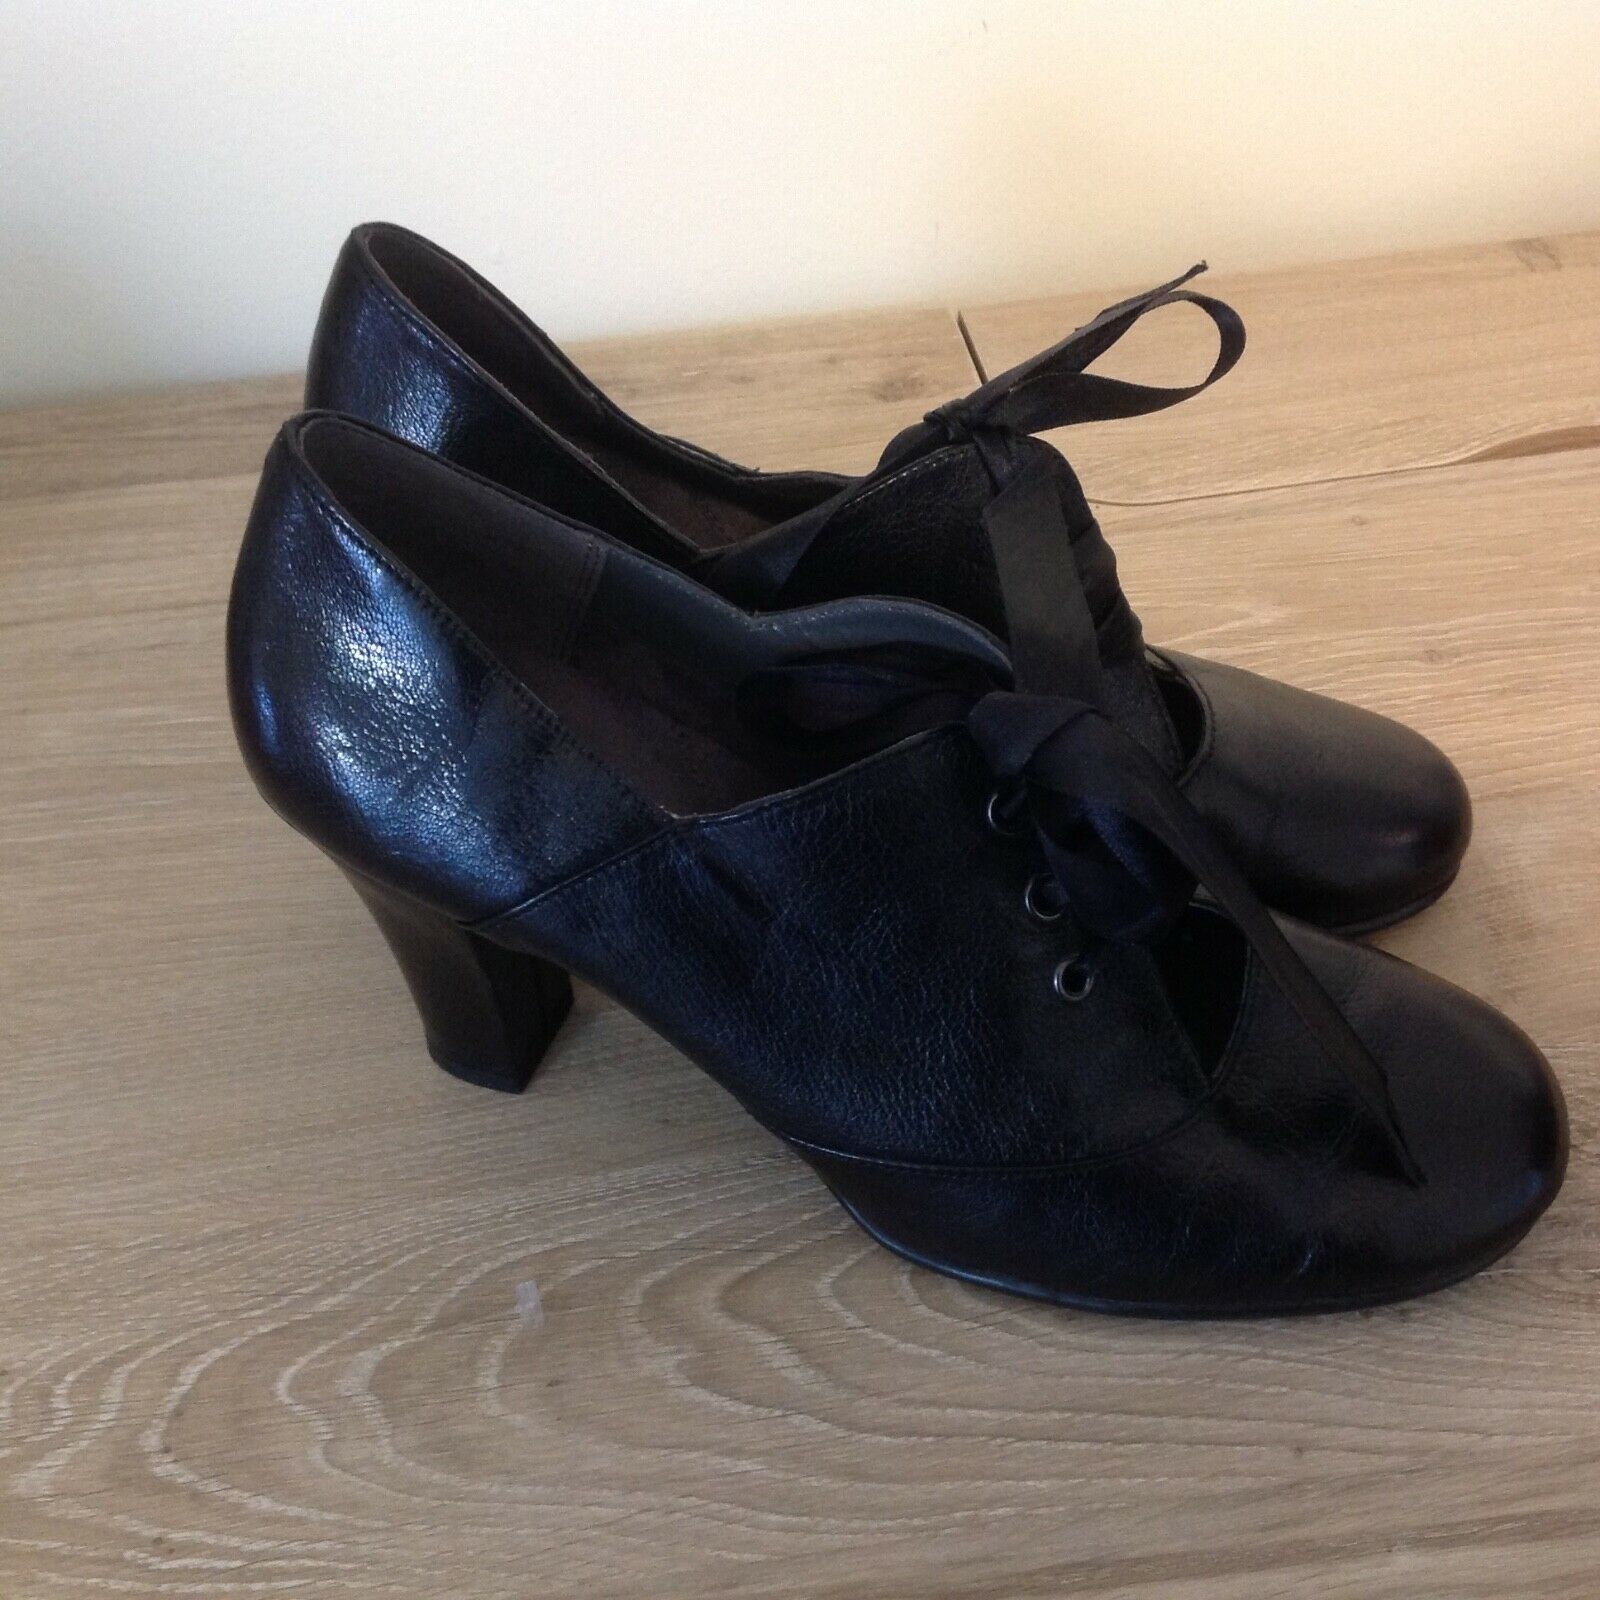 Aerosoles Minor Role Black Leather Vintage Style Heels Shoes Ribbon Lace Up 9M